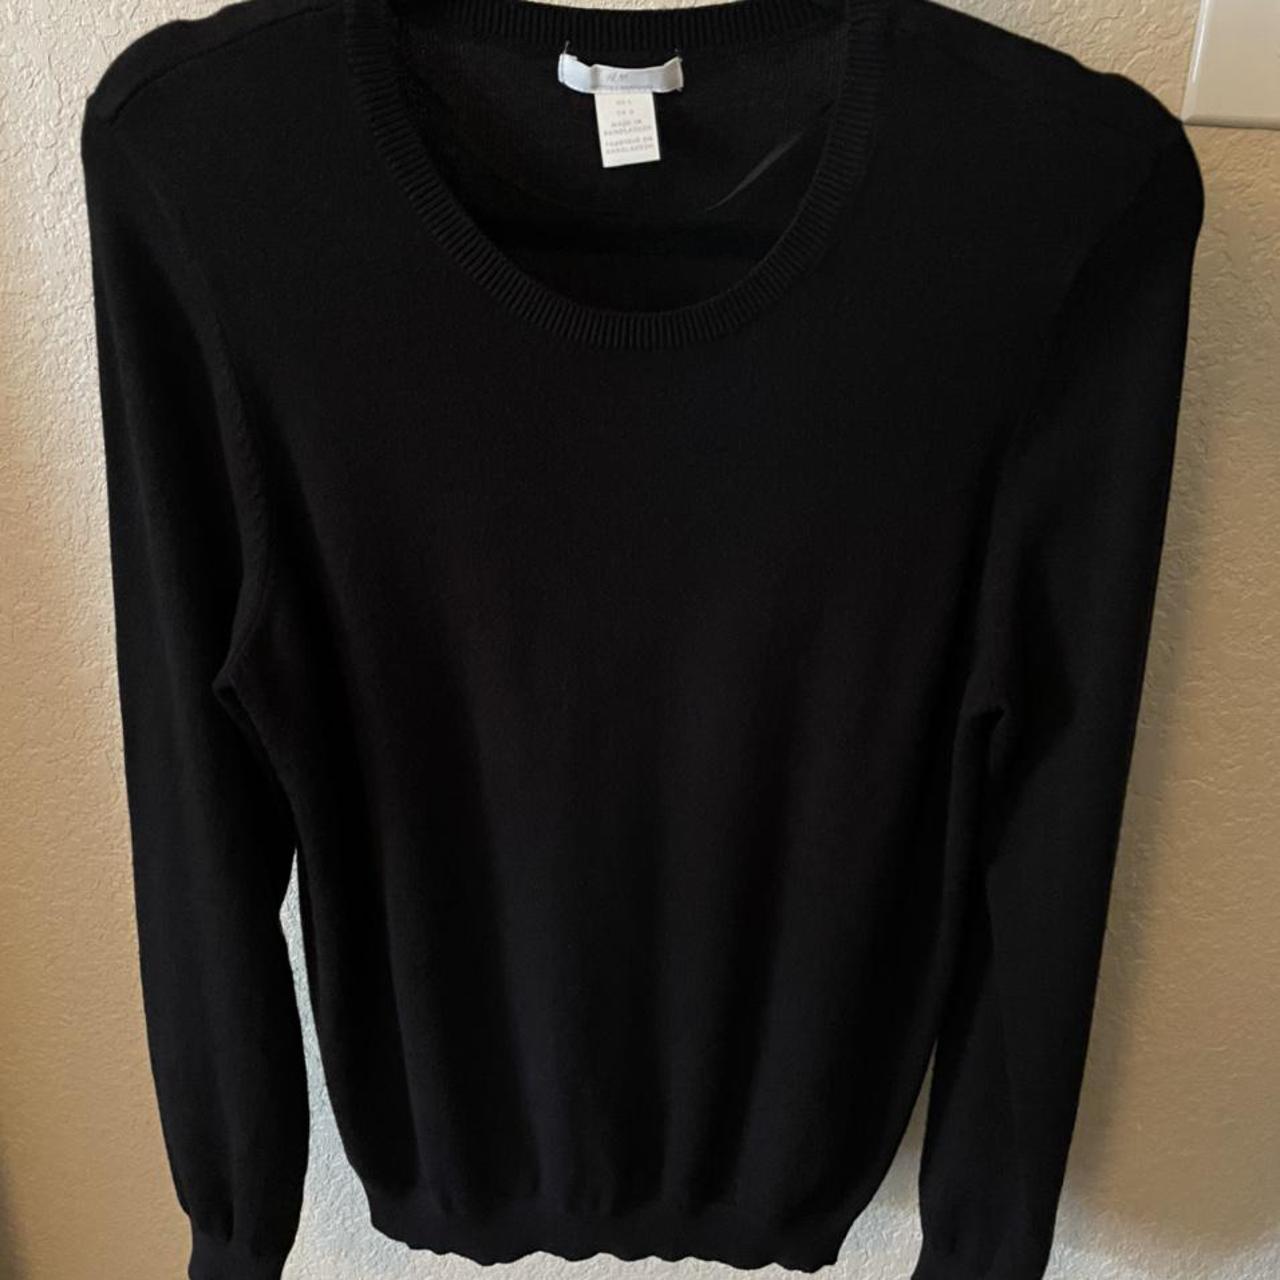 Product Image 1 - H&M black knitted crewneck sweatshirt
Lightweight